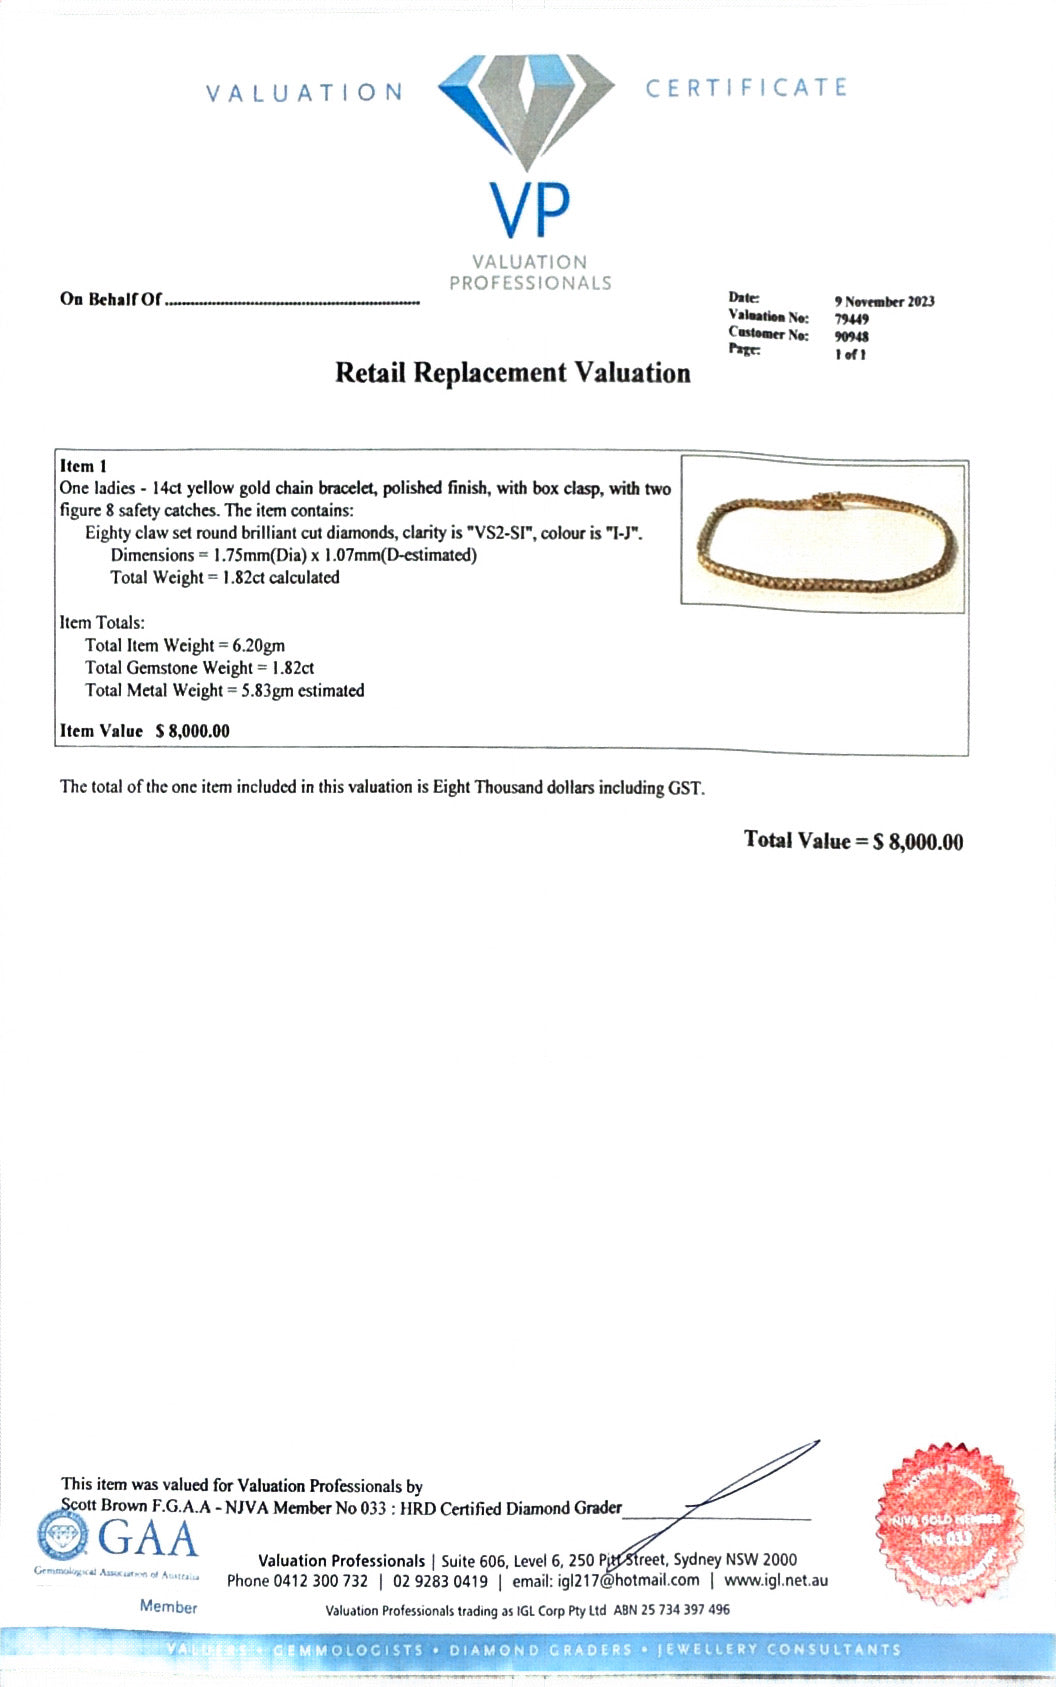 1.82ct YG Diamond Tennis bracelet bracelet in 14ct